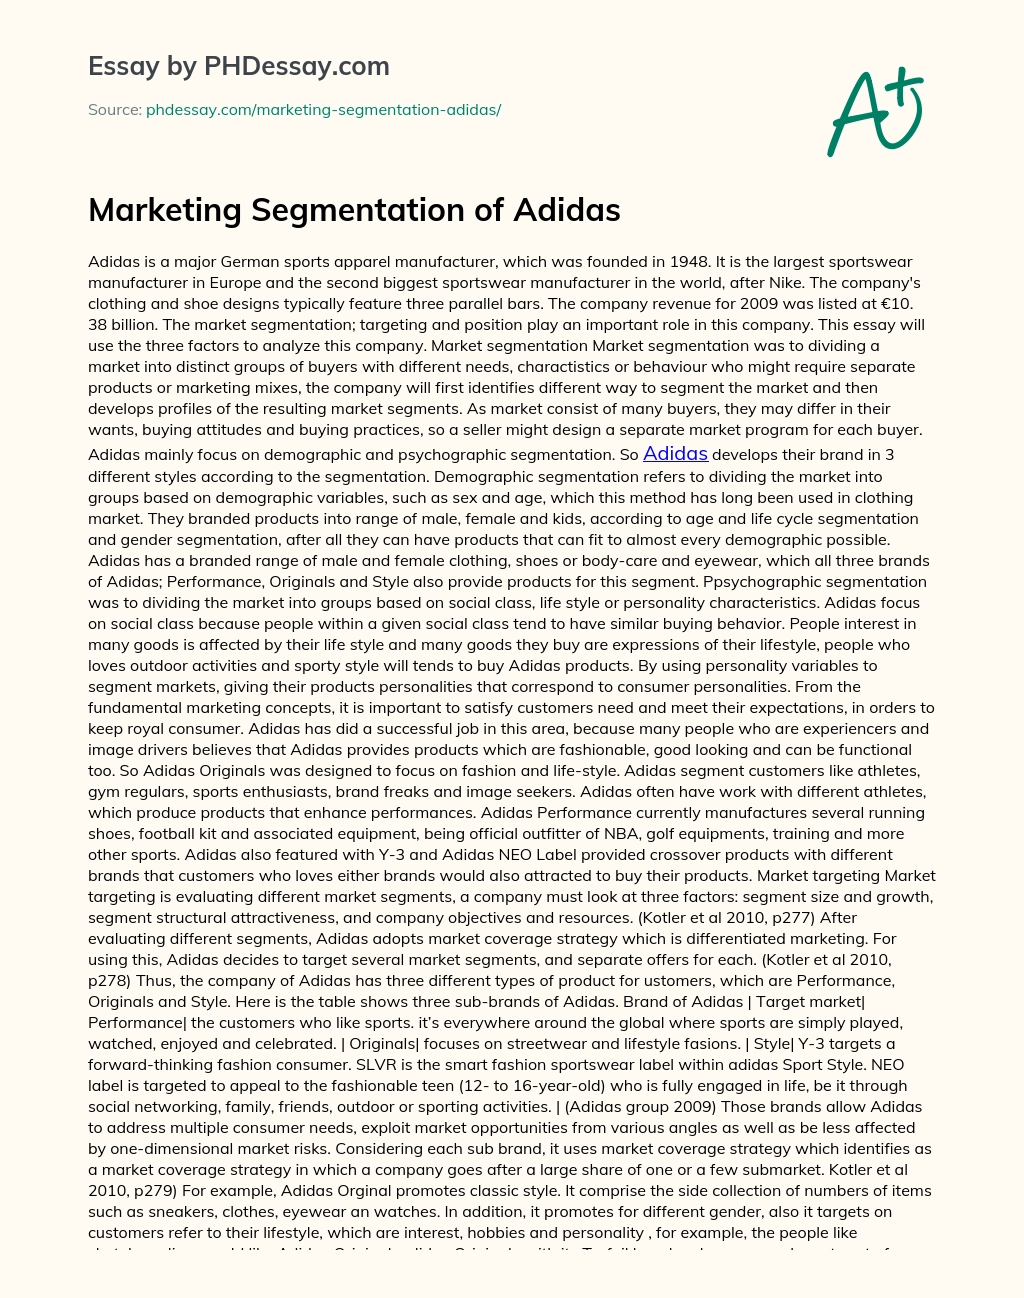 adidas target market demographics